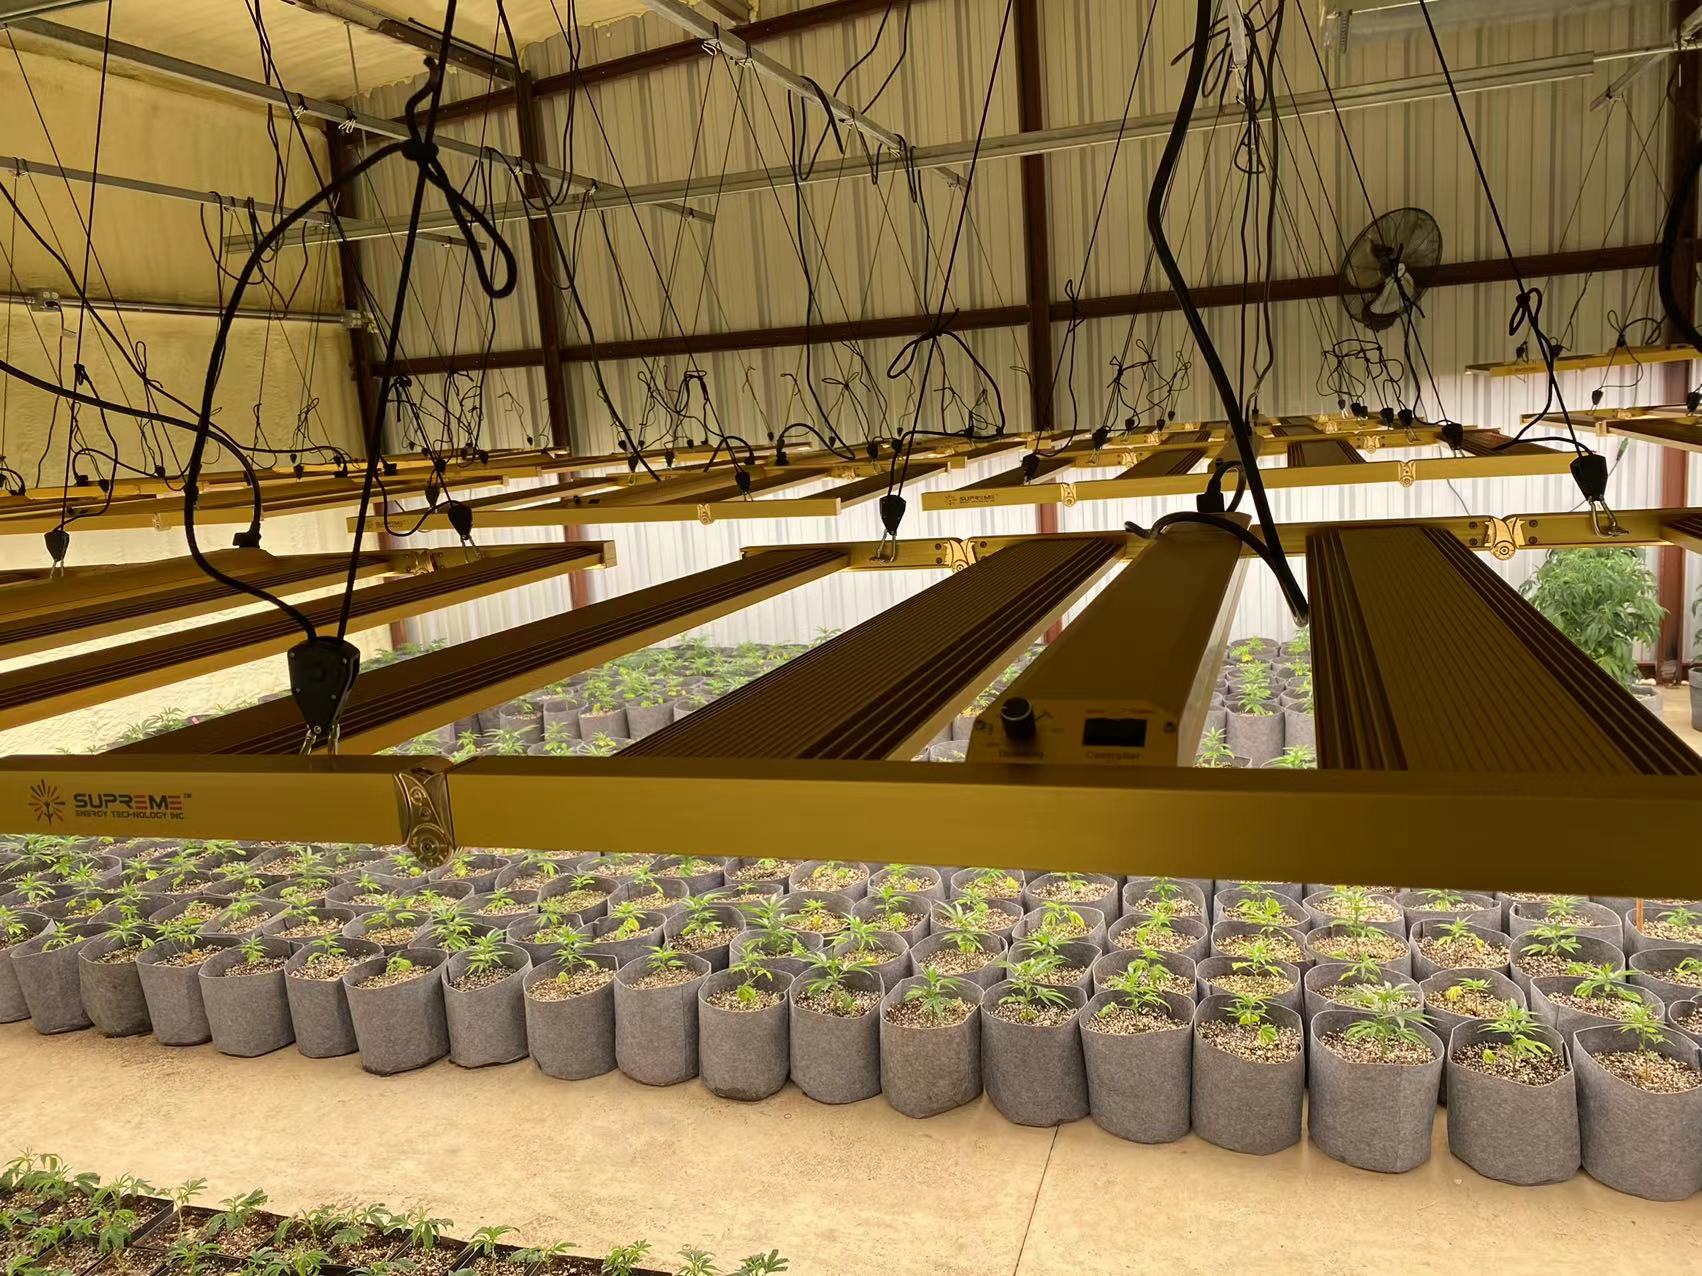 Growing Industrial Hemp in a Greenhouse Using Grow Lights